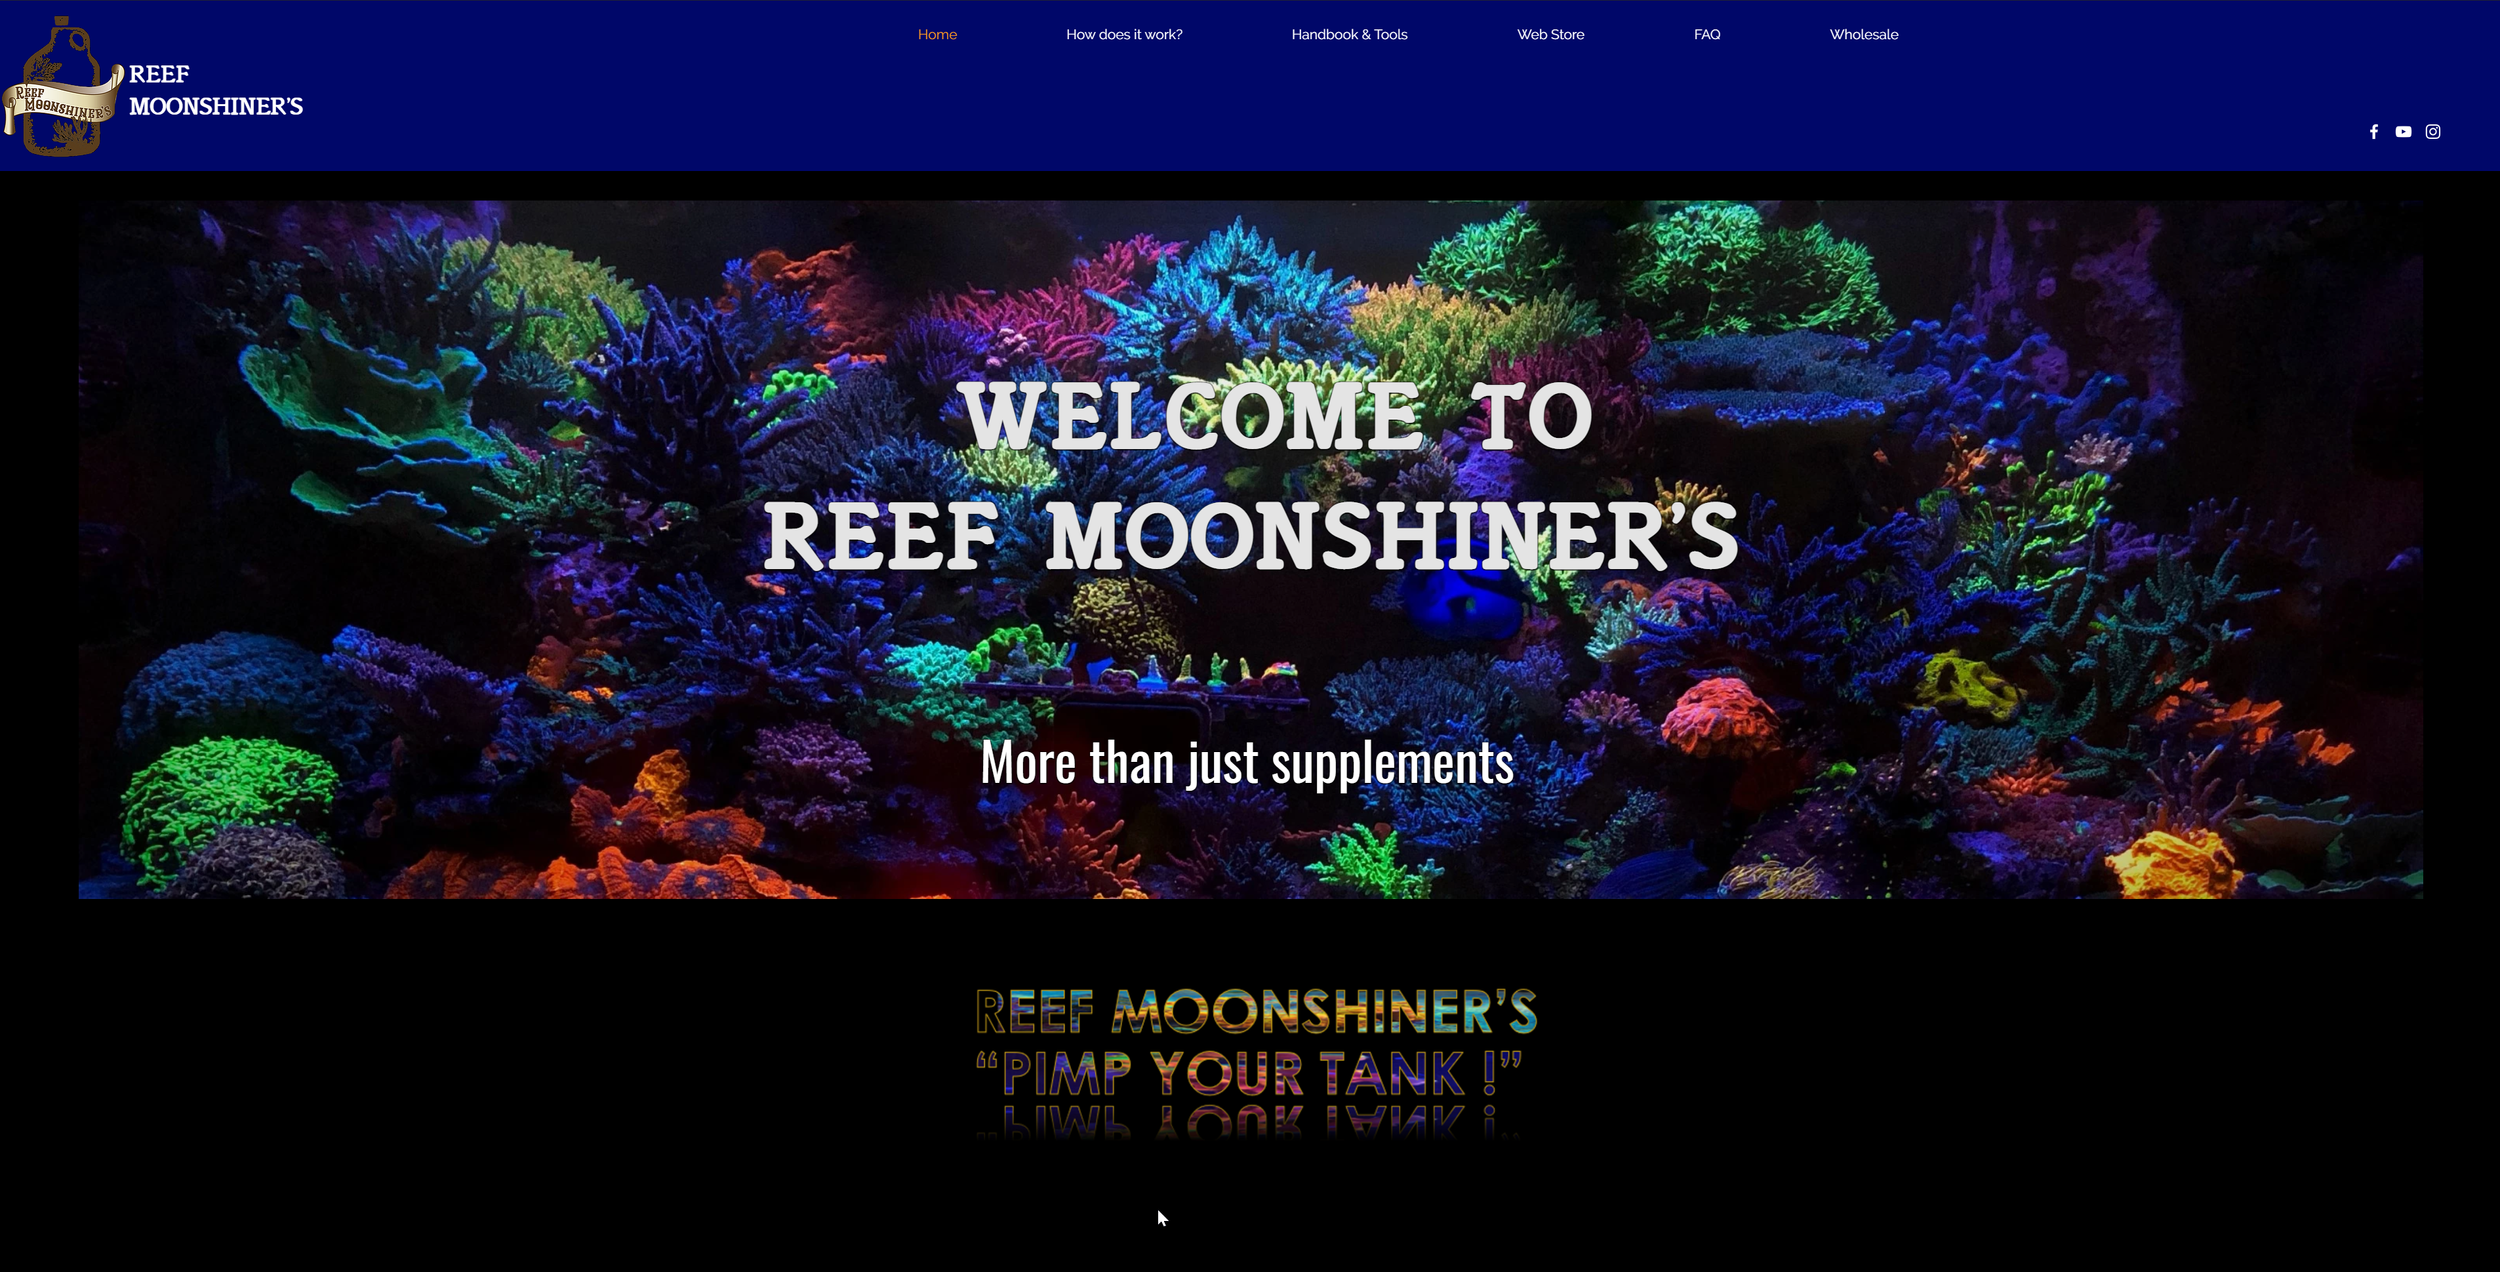 www.reefmoonshiners.com